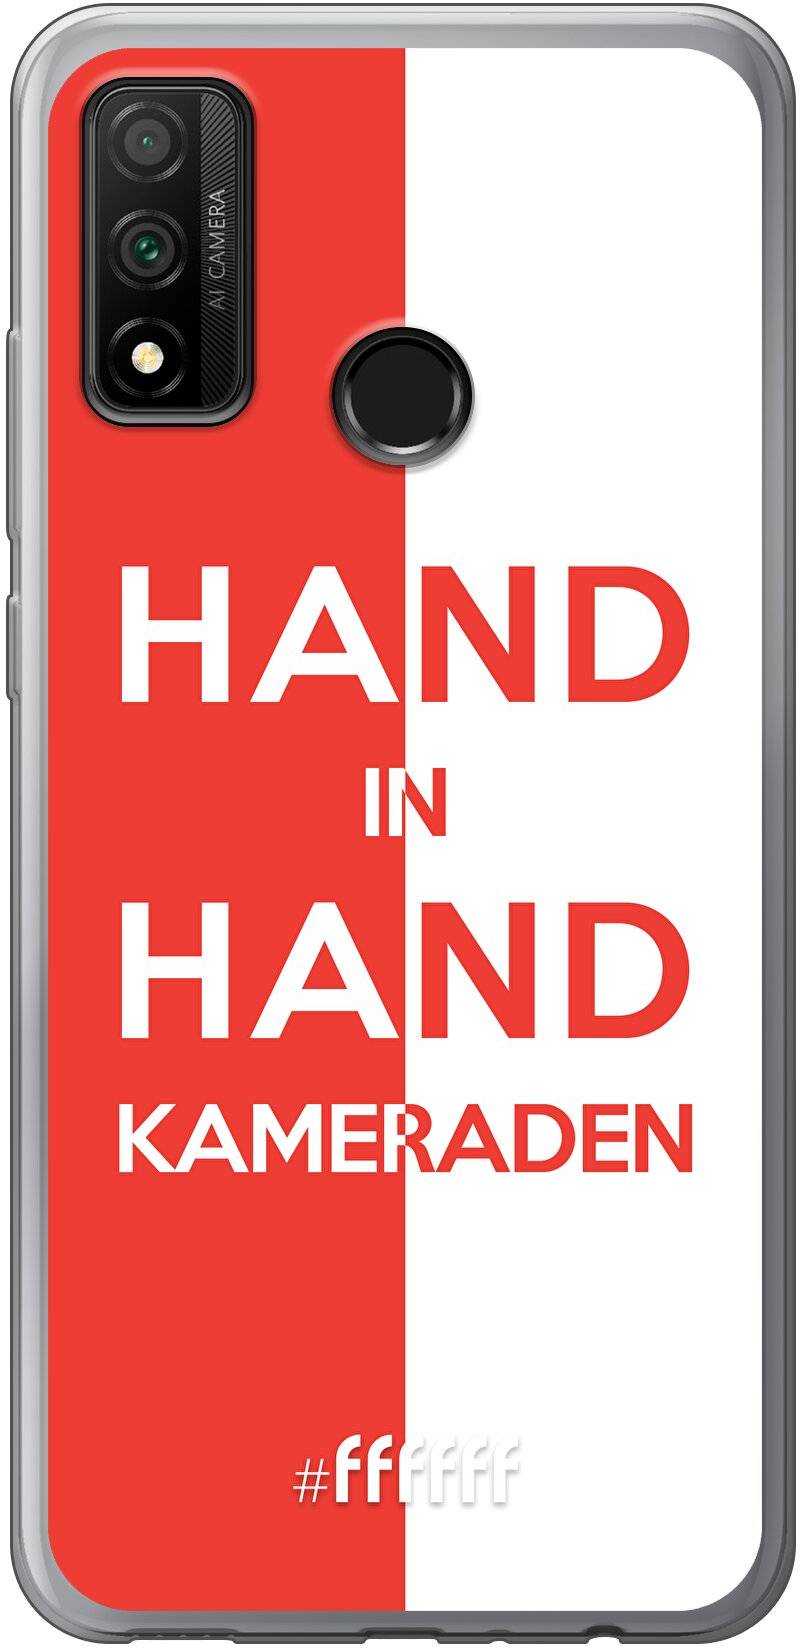 Feyenoord - Hand in hand, kameraden P Smart (2020)